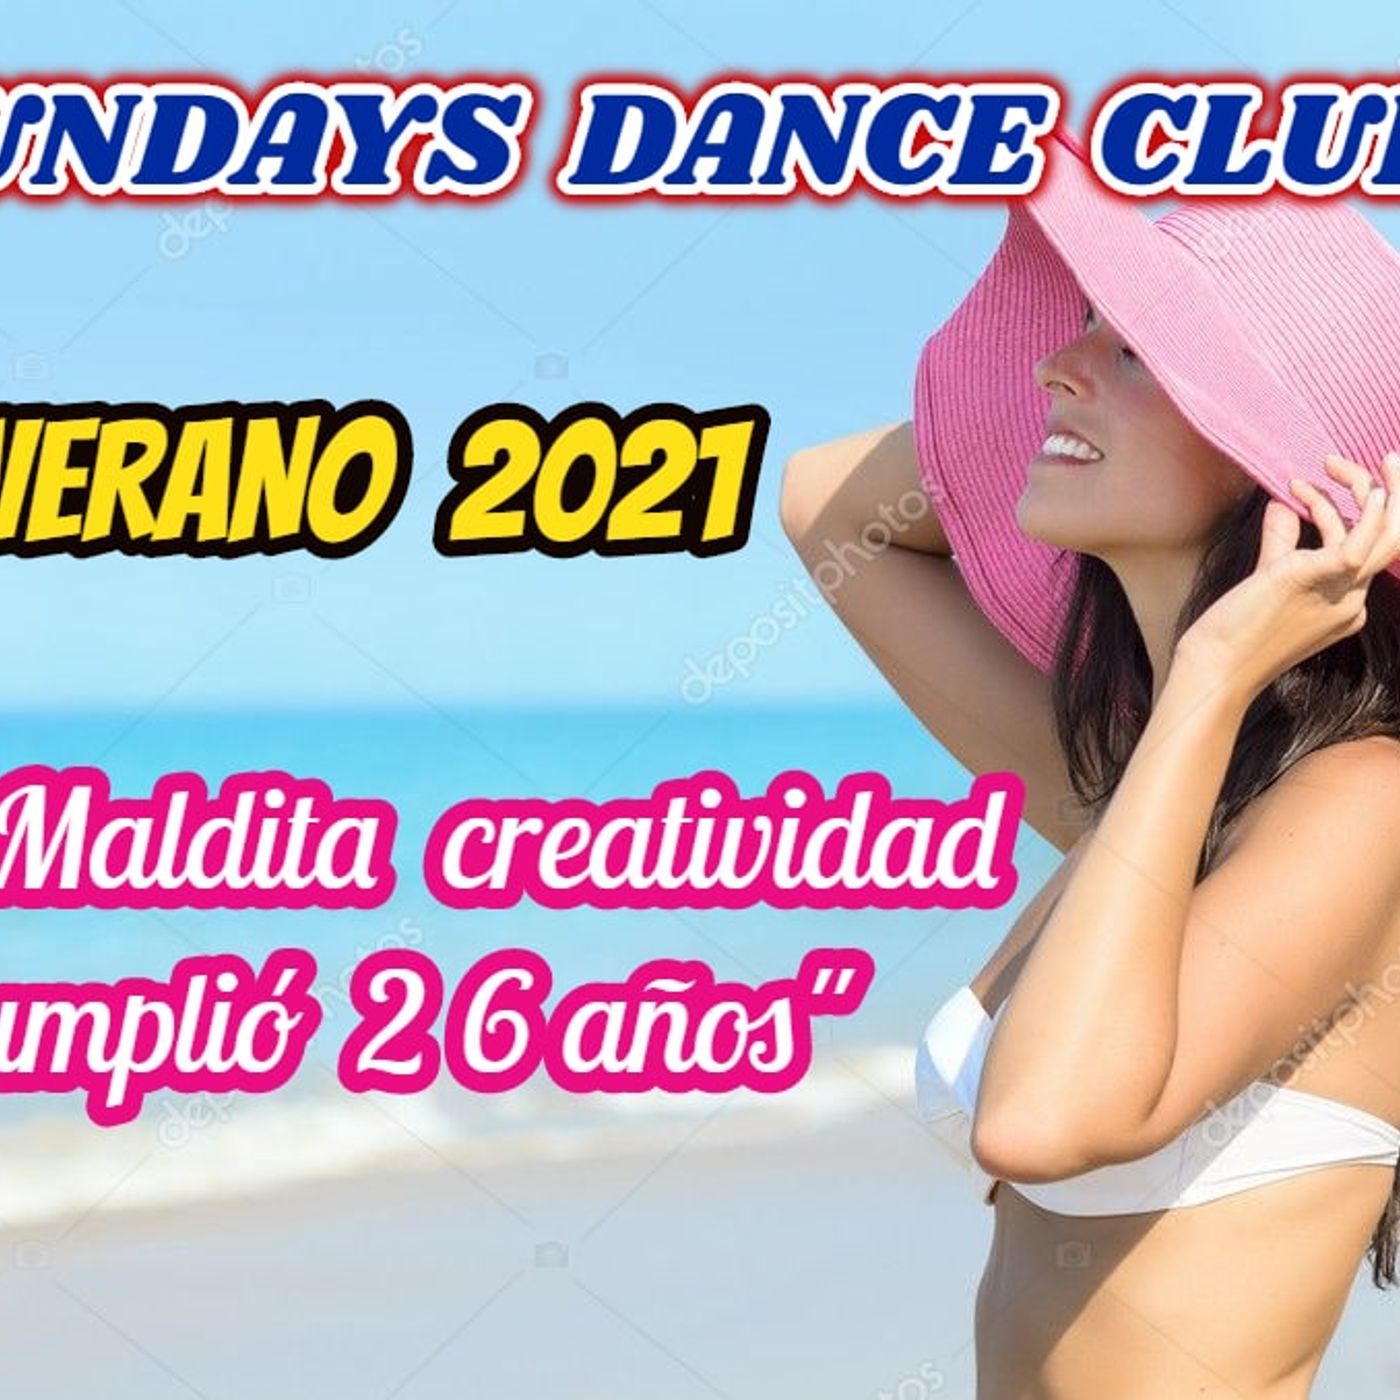 Sundays Dance Club